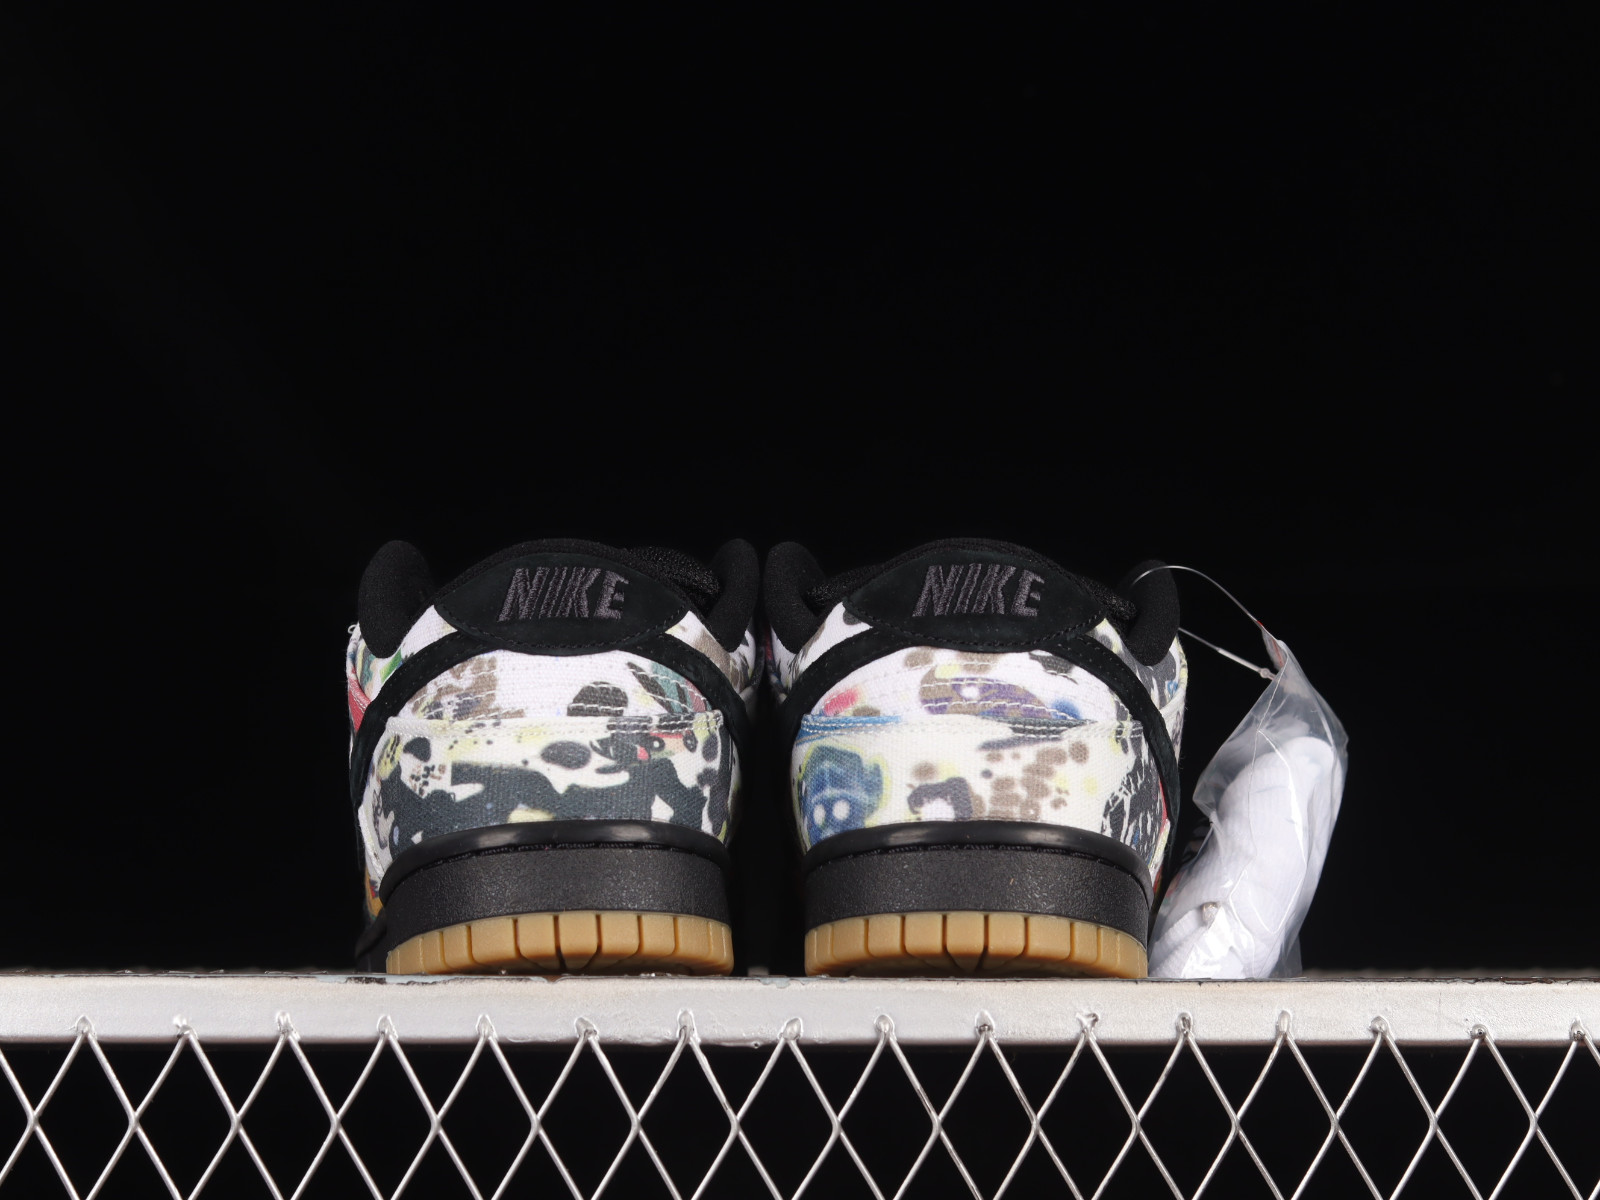 Nike SB Dunk Low Supreme Rammellzee Men's - FD8778-001 - US